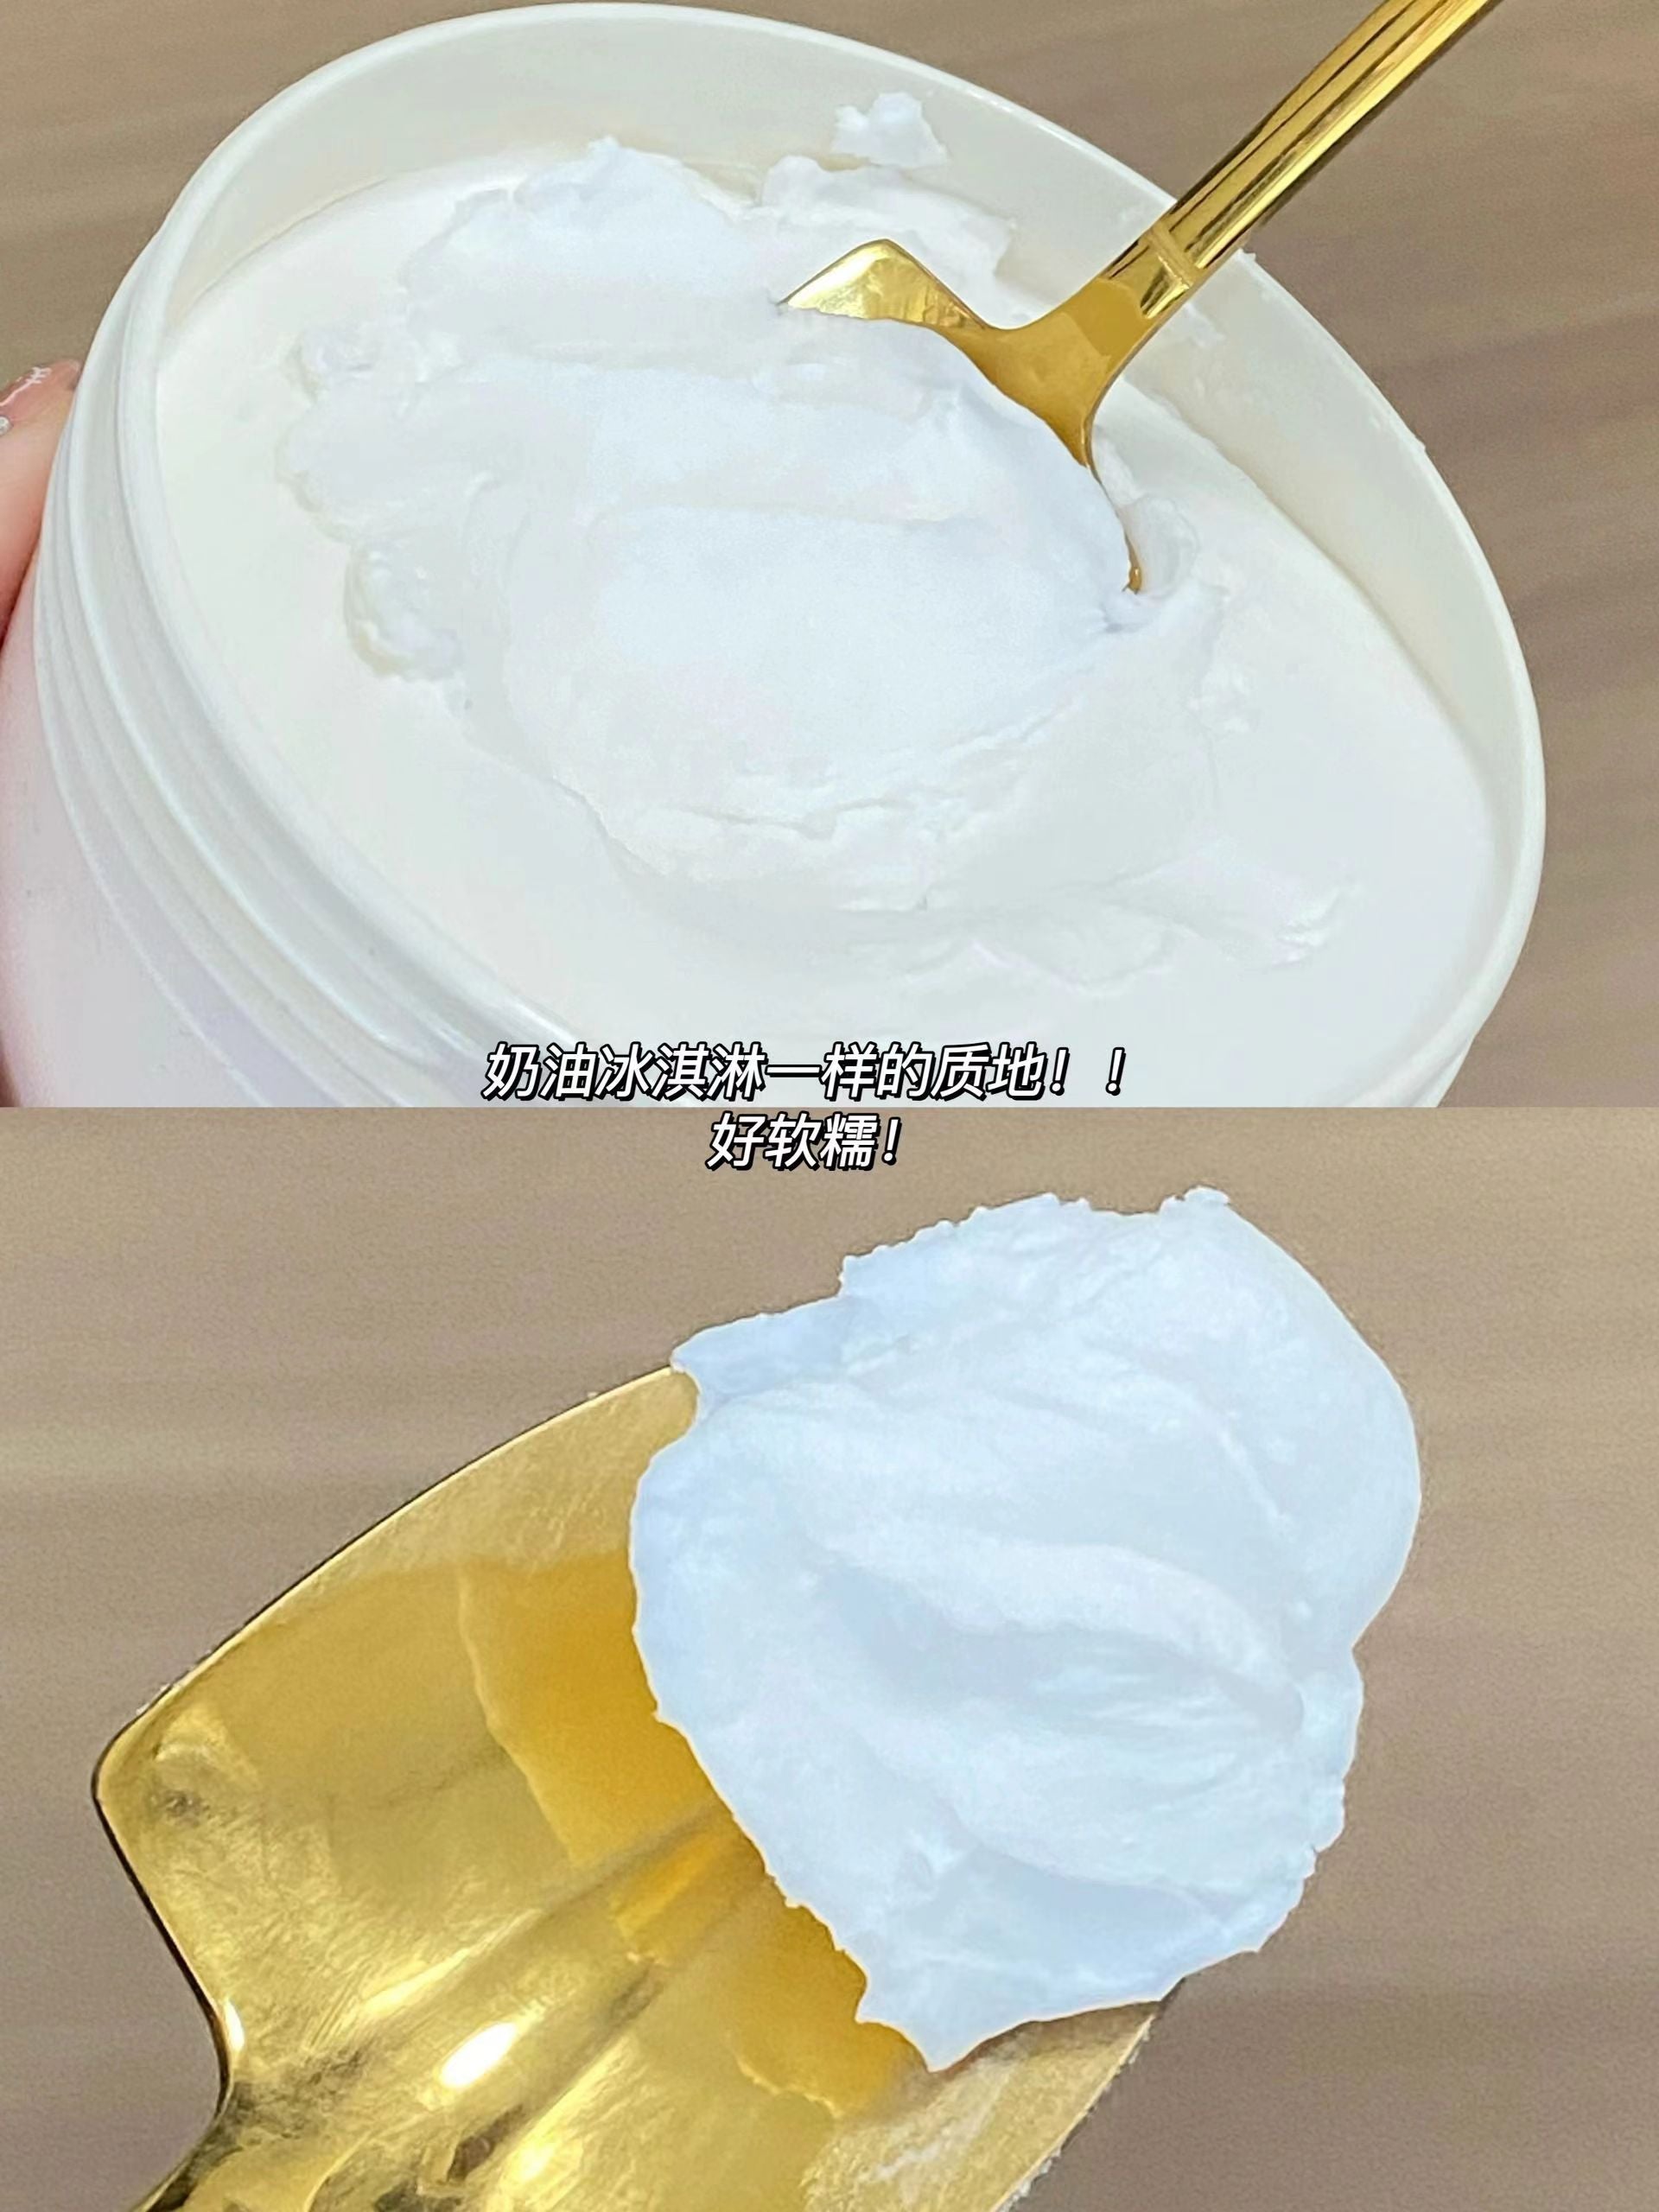 Puljim Tipsy Goodnight Body Cooling Cream New Year Limited Edition Fortune Bucket 500g 宝玑米微醺晚安身体冷霜新年限定发财桶